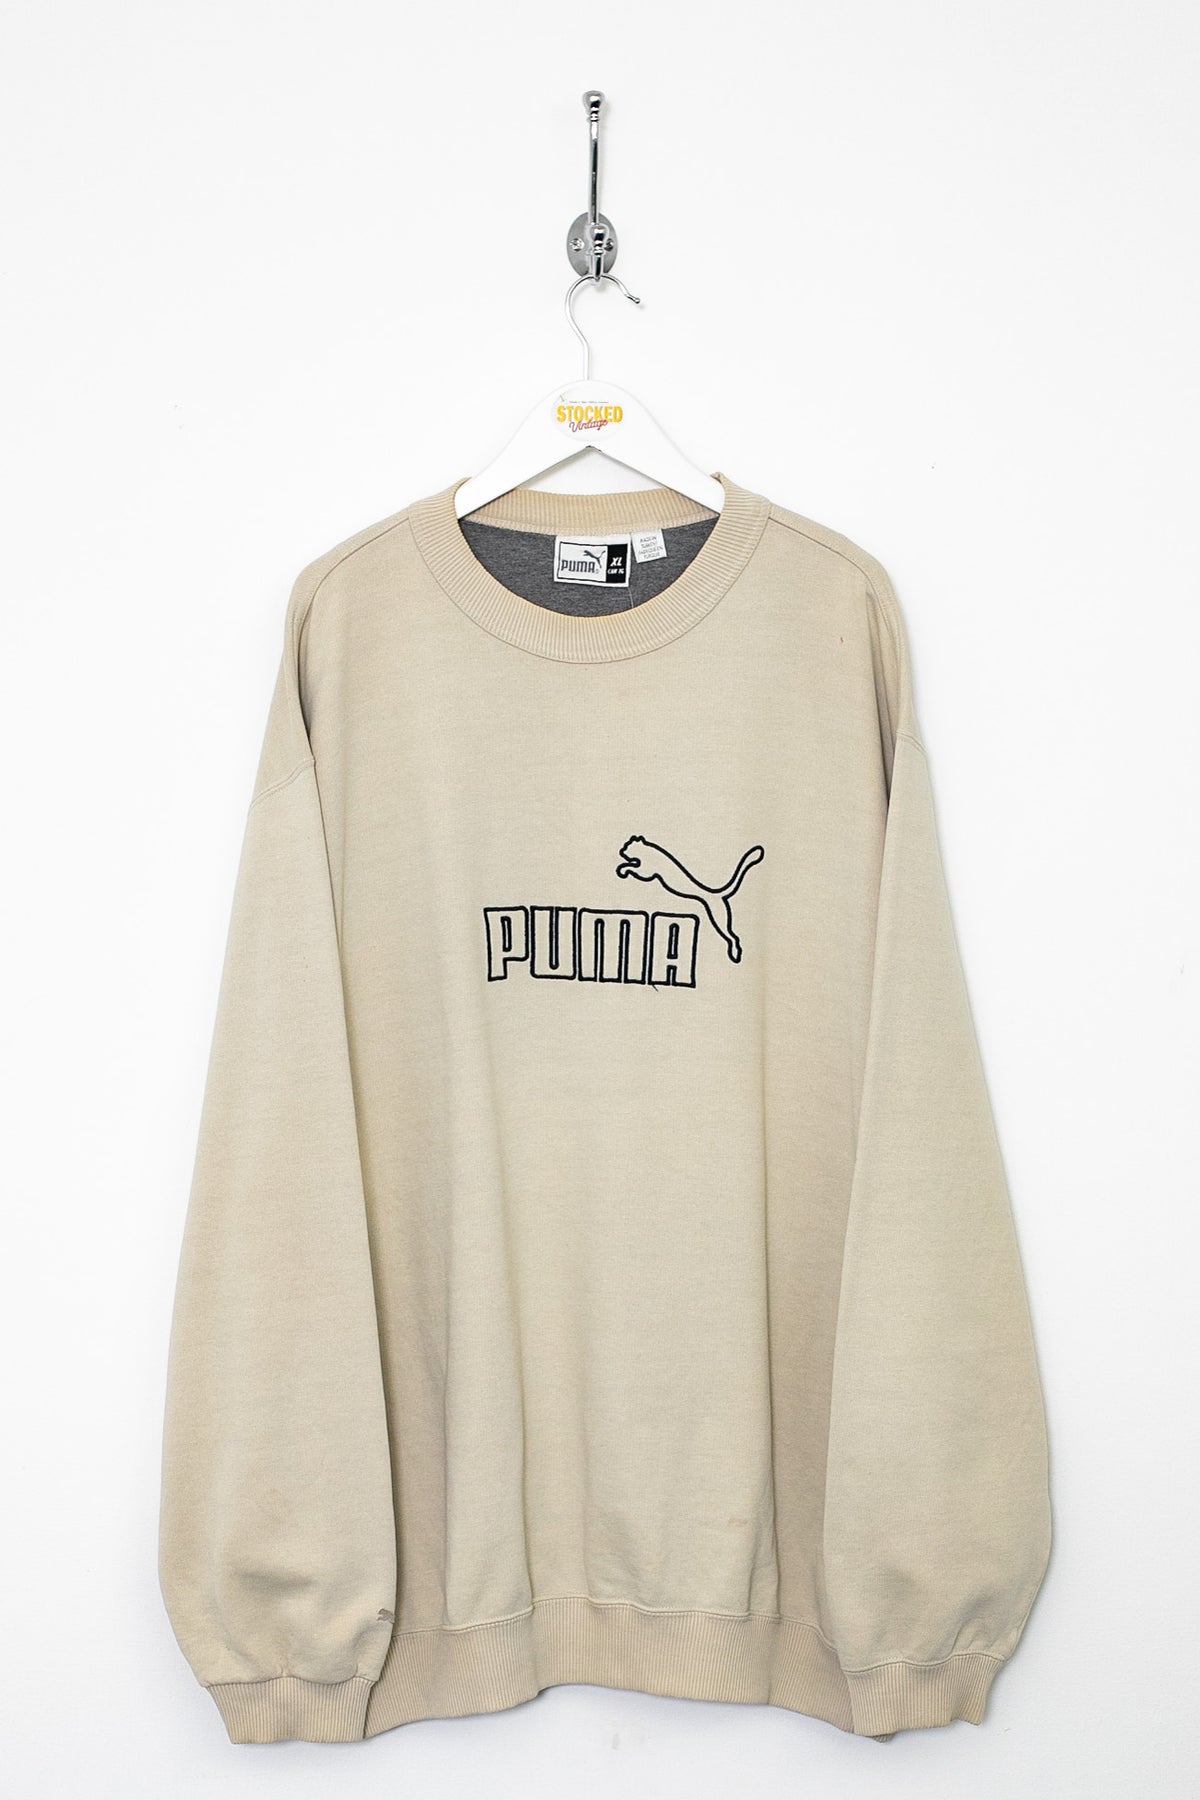 00s Puma Sweatshirt (XL)